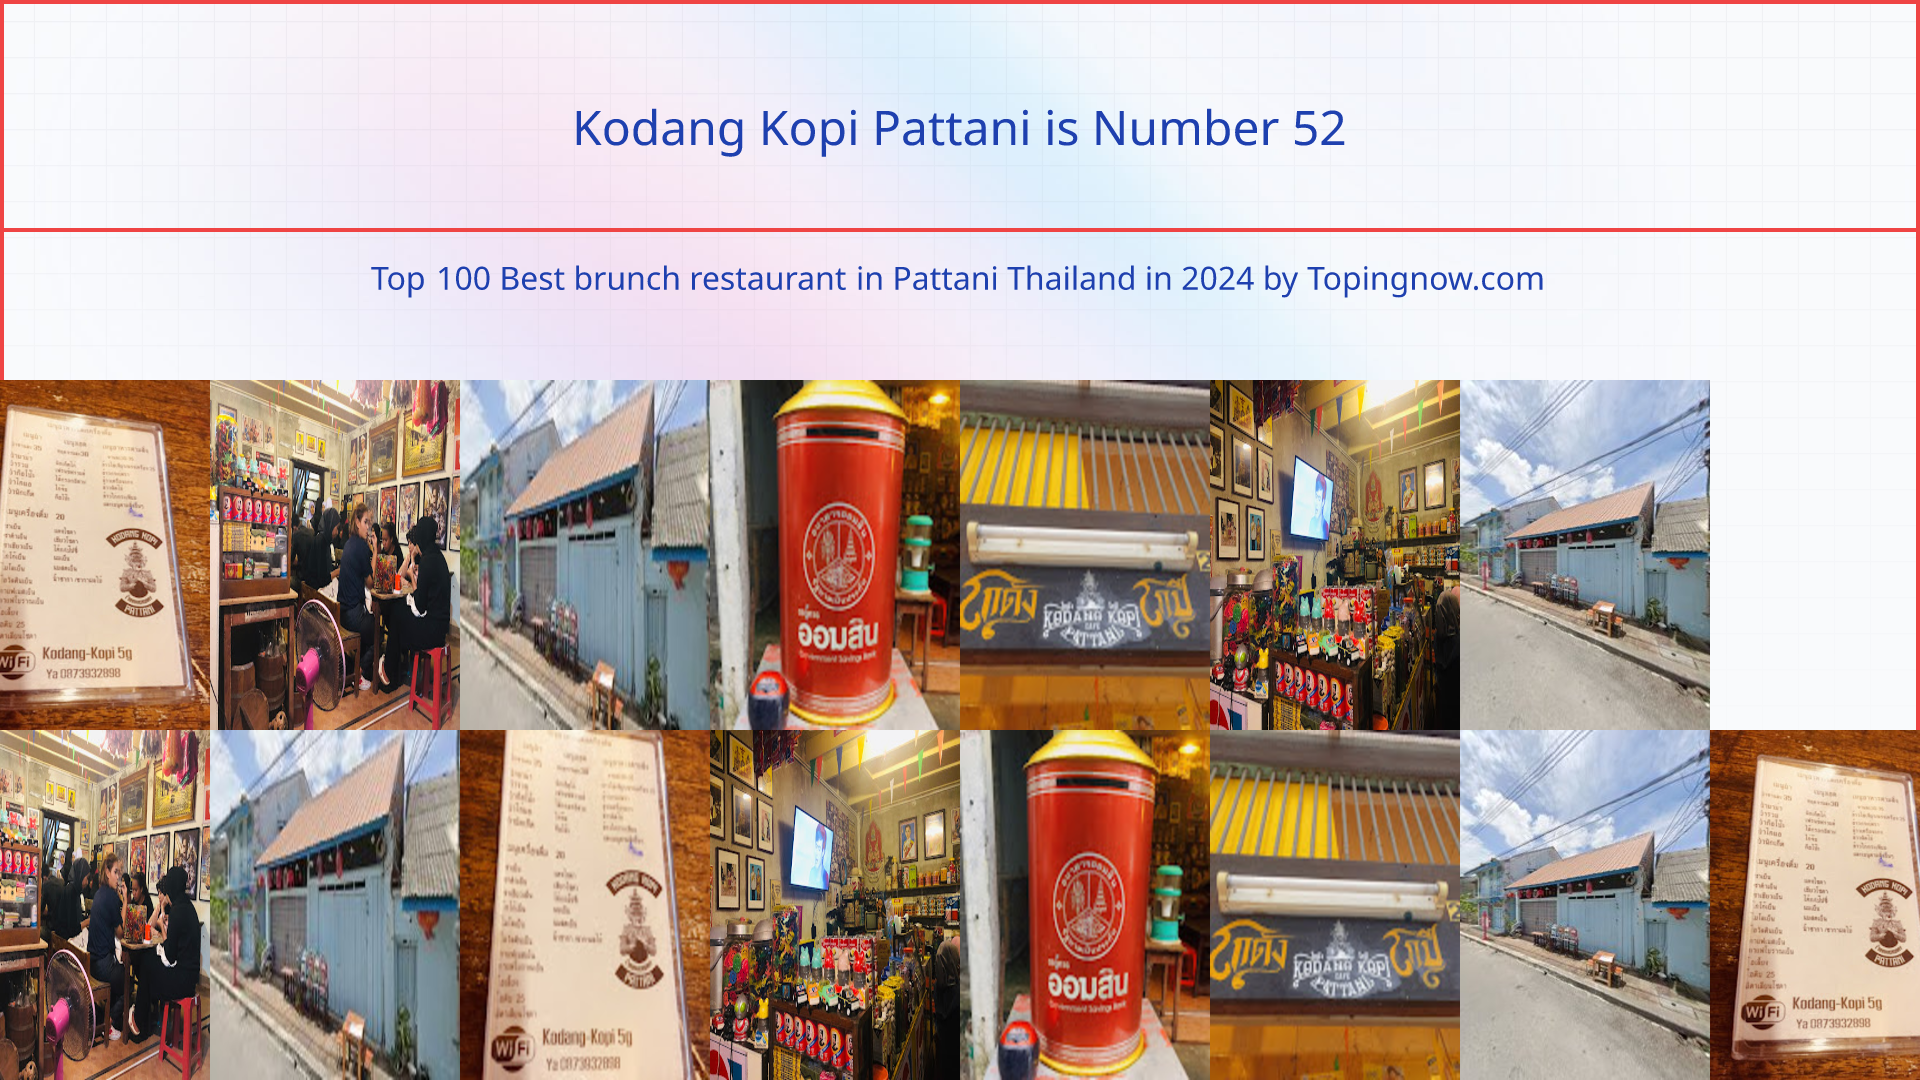 Kodang Kopi Pattani: Top 100 Best brunch restaurant in Pattani Thailand in 2024